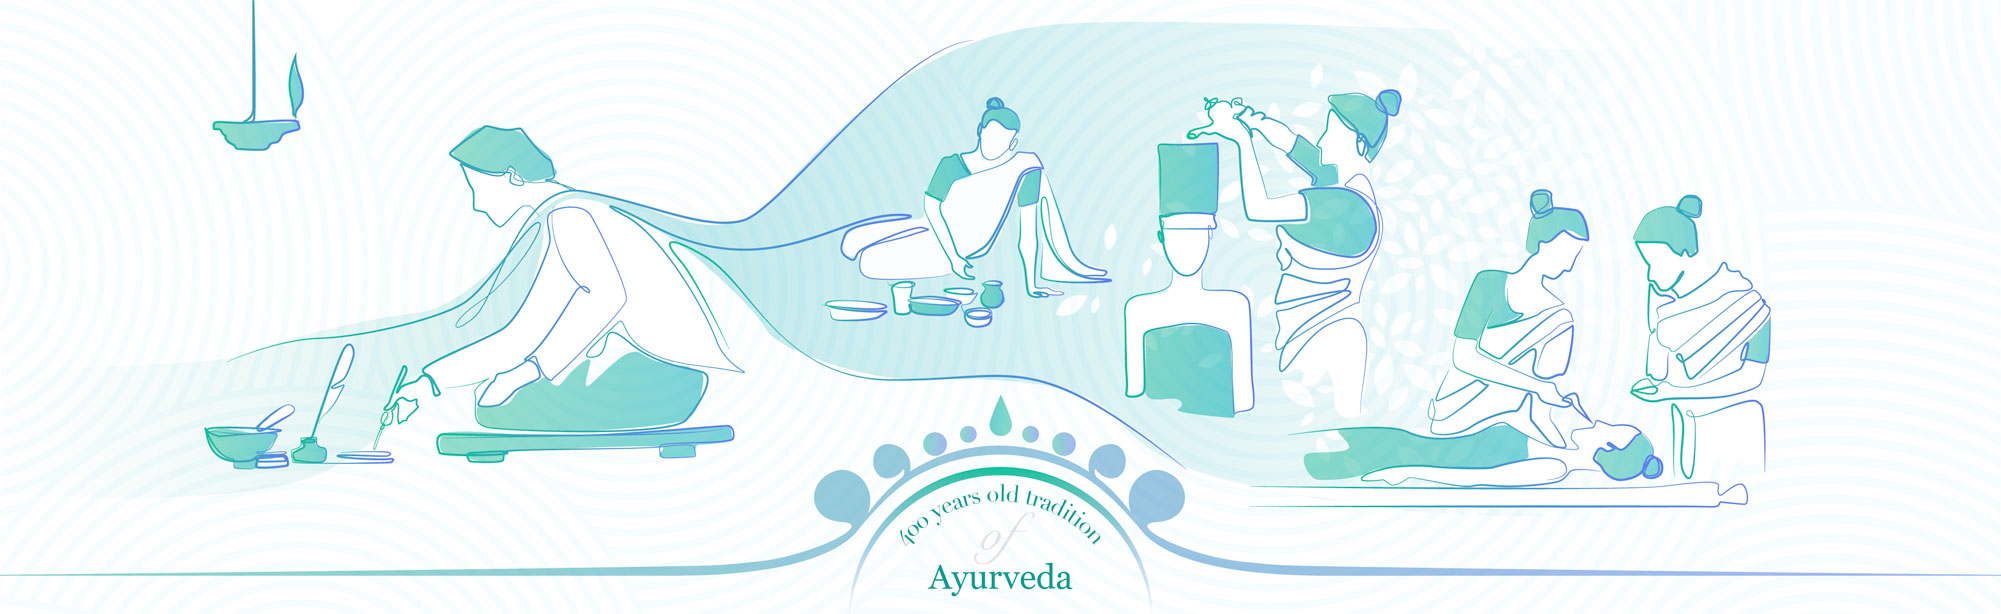 Medicine prepration and administration using traditional ayurvedic methods